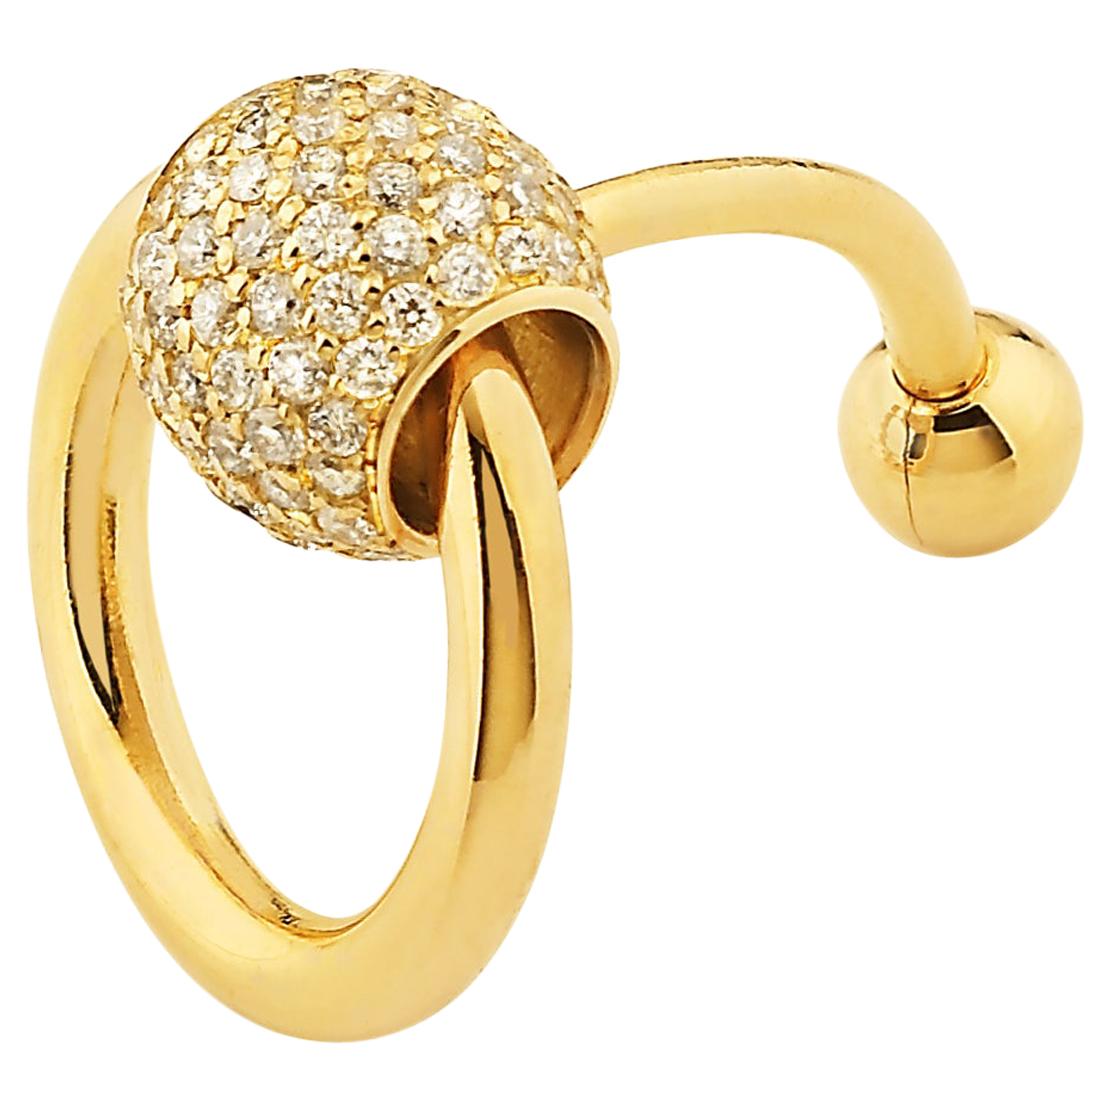 Betony Vernon "O-Ring Navel Piercing" Piercing 18K Gold Pavée Diamond For Sale